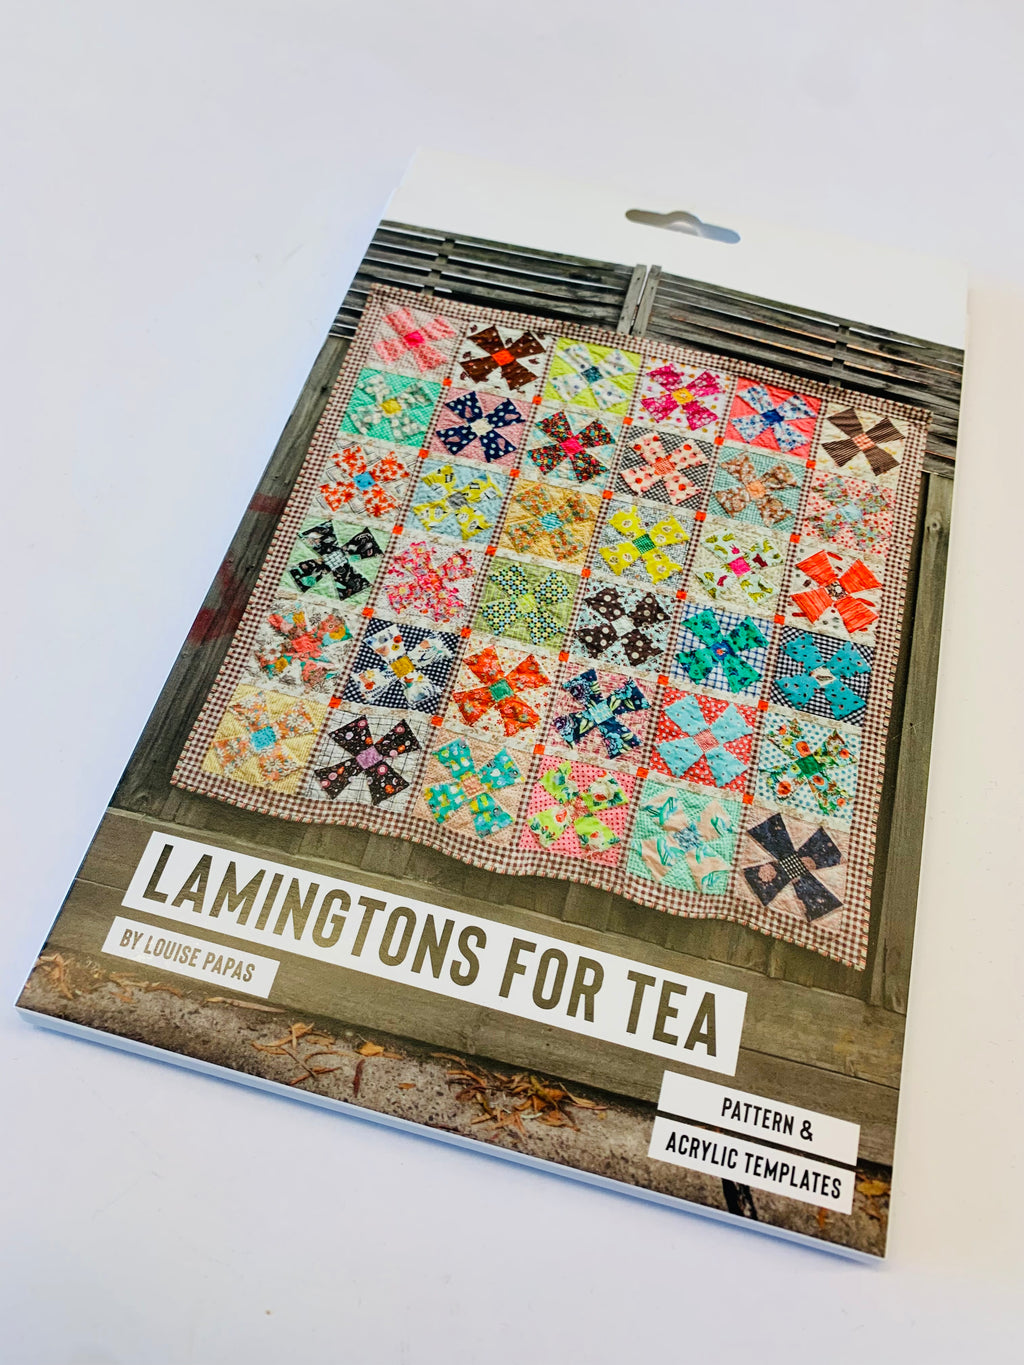 Louise Papas/ Lamingtons for Tea Pattern & Acrylic Templates